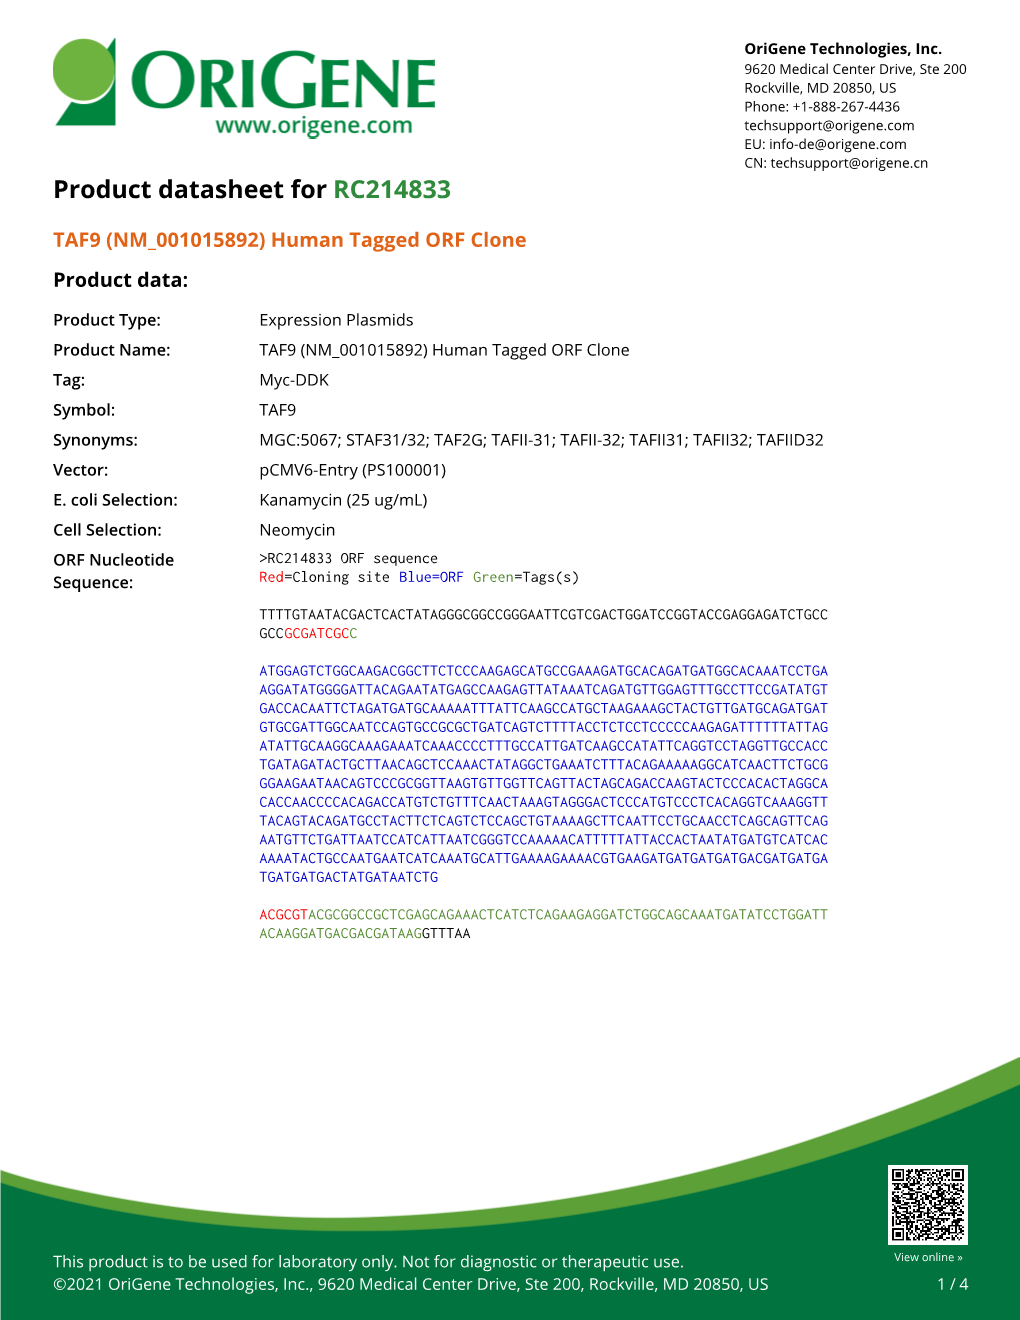 TAF9 (NM 001015892) Human Tagged ORF Clone Product Data